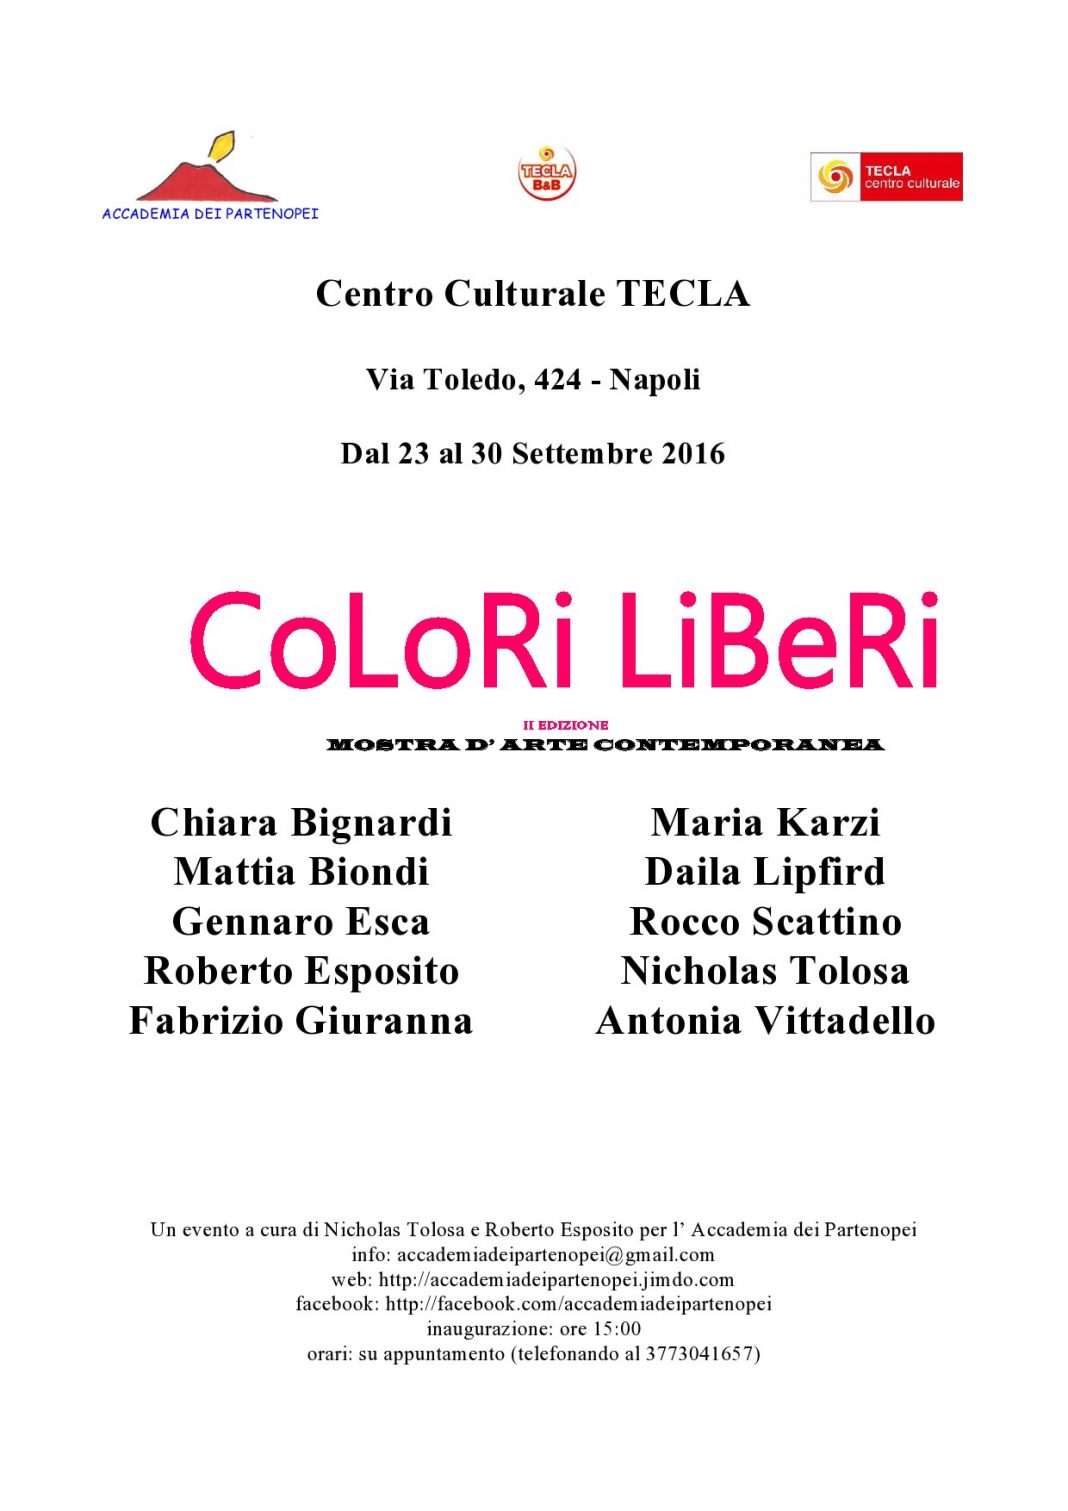 CoLoRi LiBeRi – II edizionehttps://www.exibart.com/repository/media/eventi/2016/09/colori-liberi-8211-ii-edizione-1068x1511.jpg